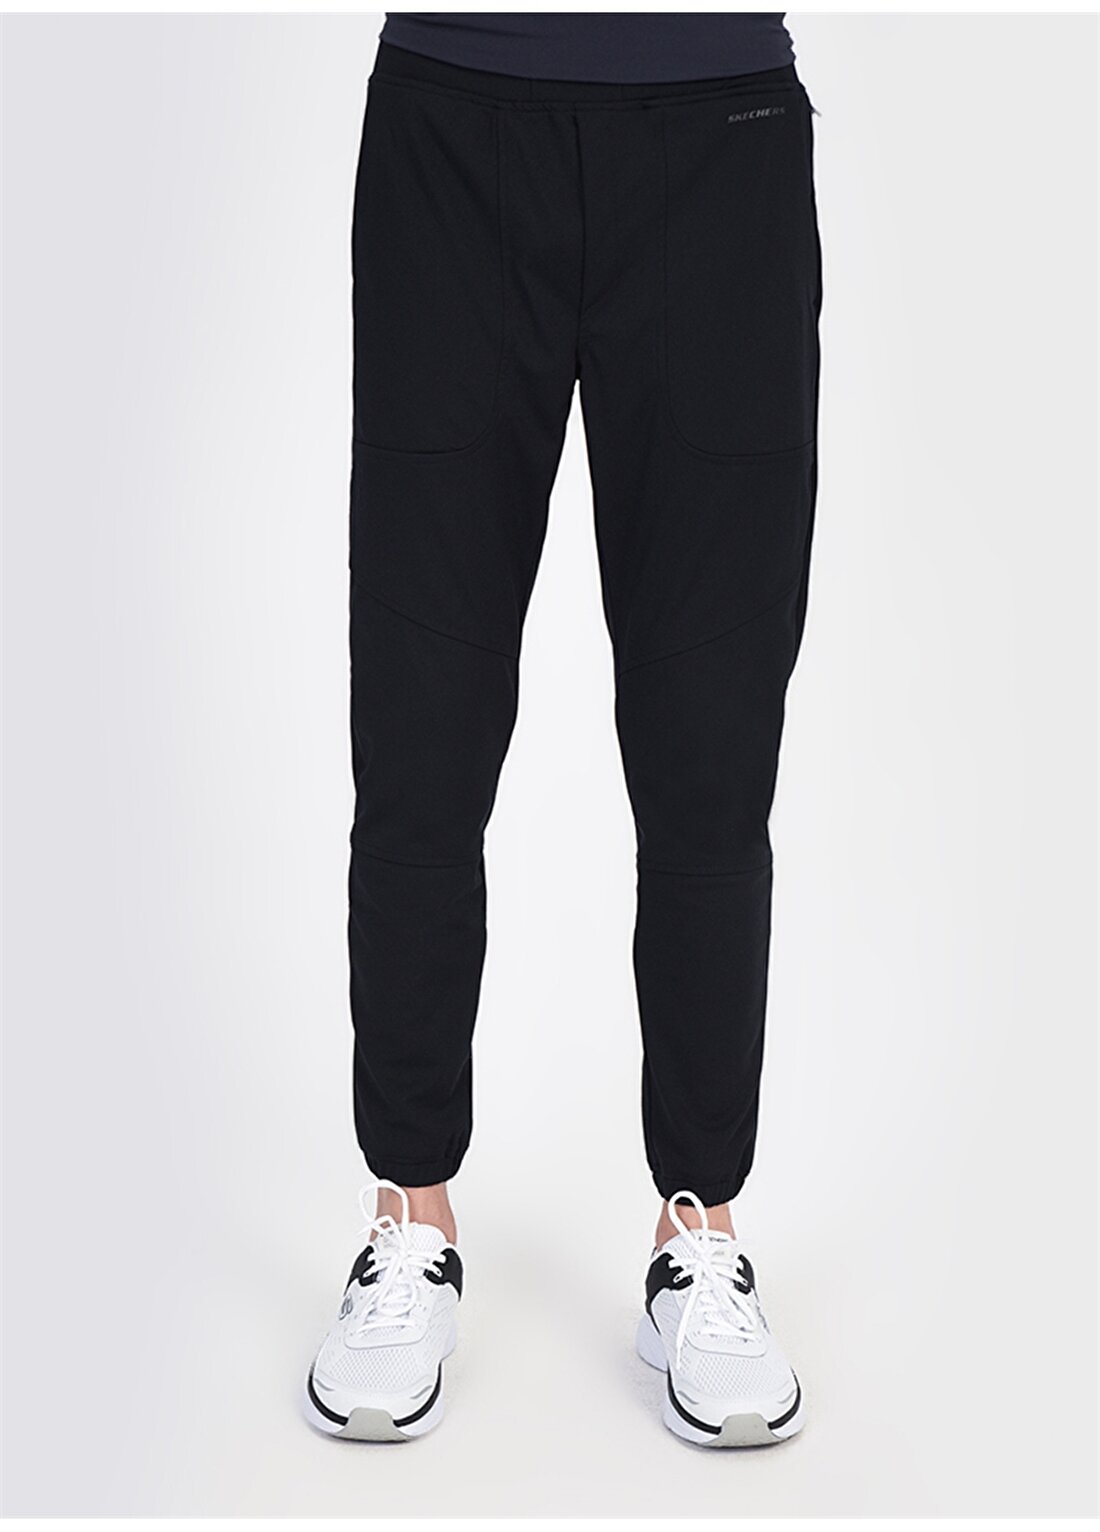 Skechers Chino Pants - Comfort M All Day Siyah Erkek Chino Pantolon